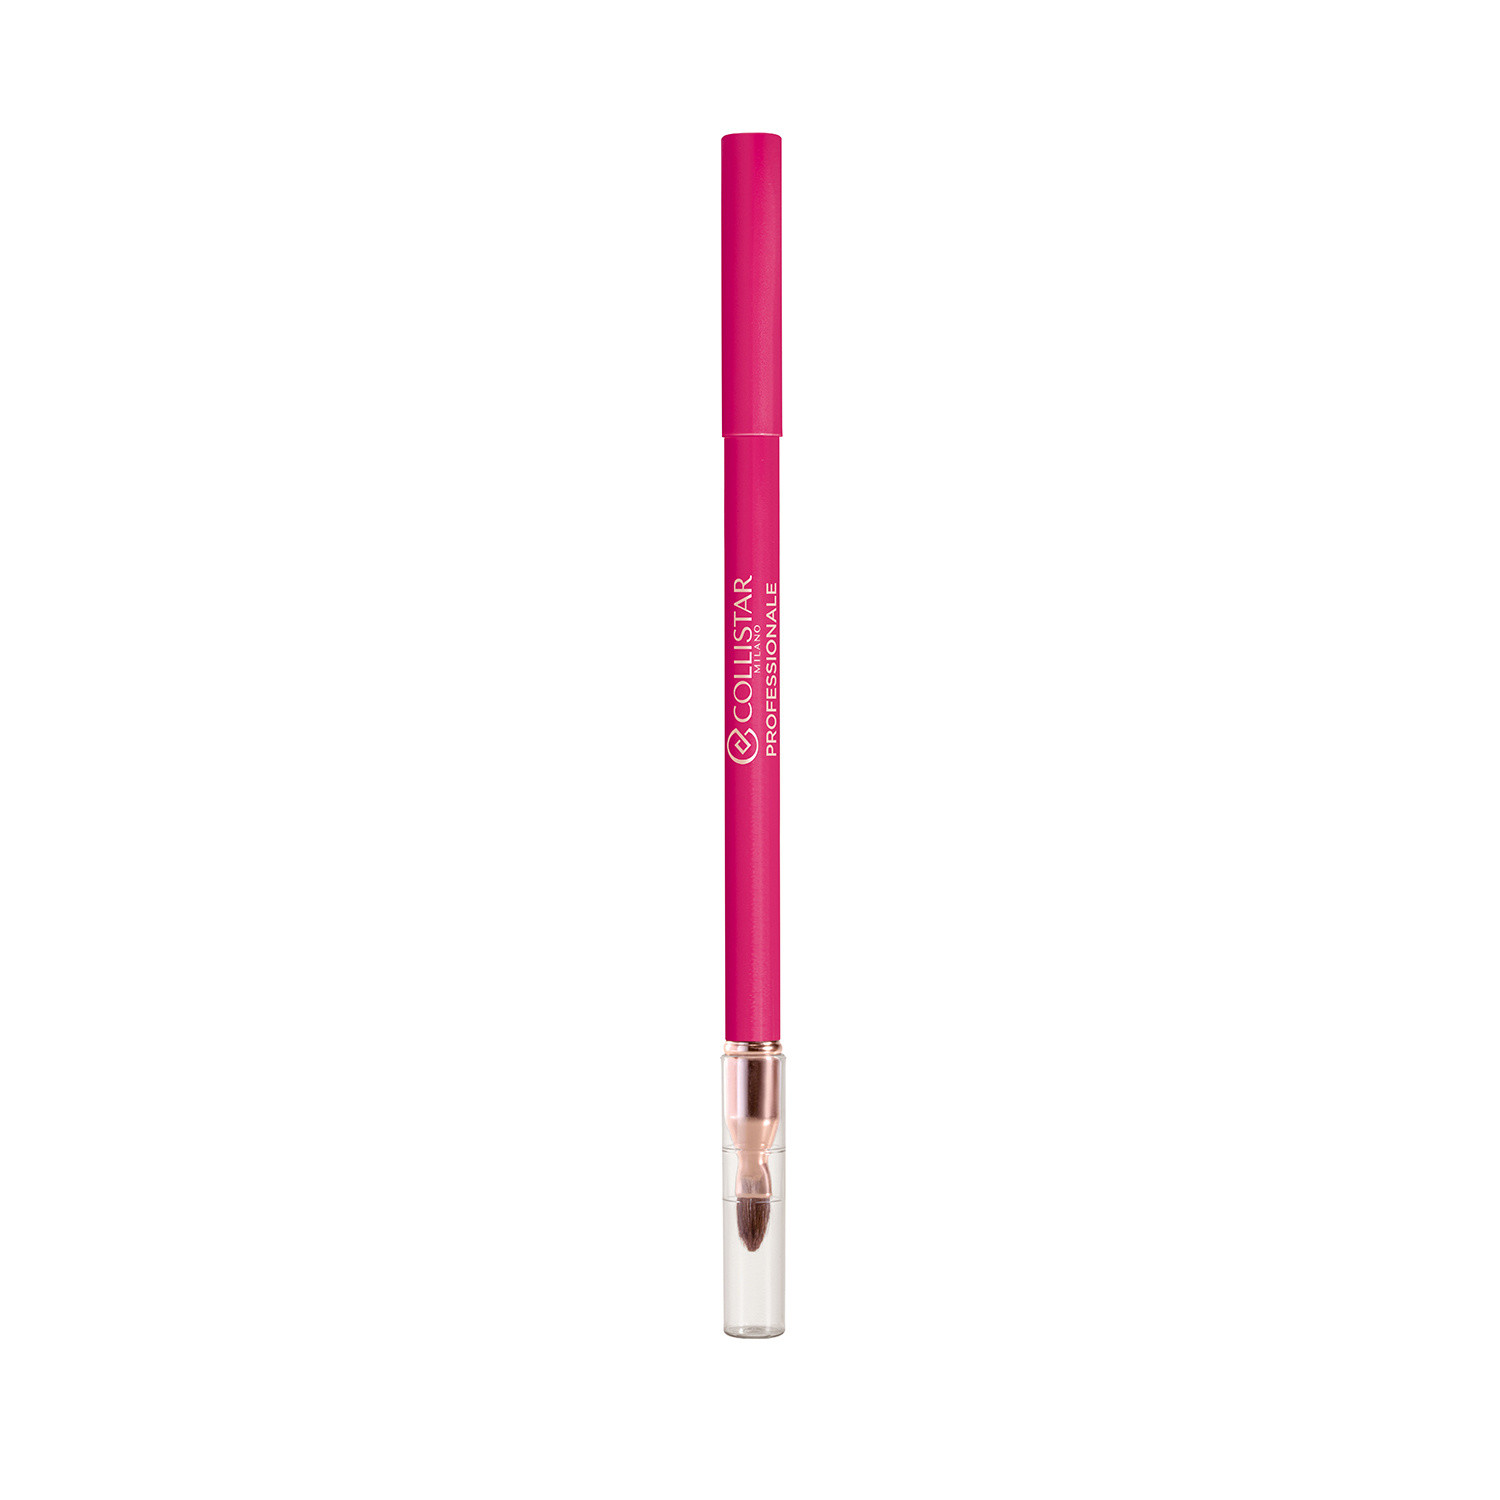 Collistar - Professionale matita labbra lunga durata - 103 Fucsia Petunia, Rosa fuxia, large image number 0